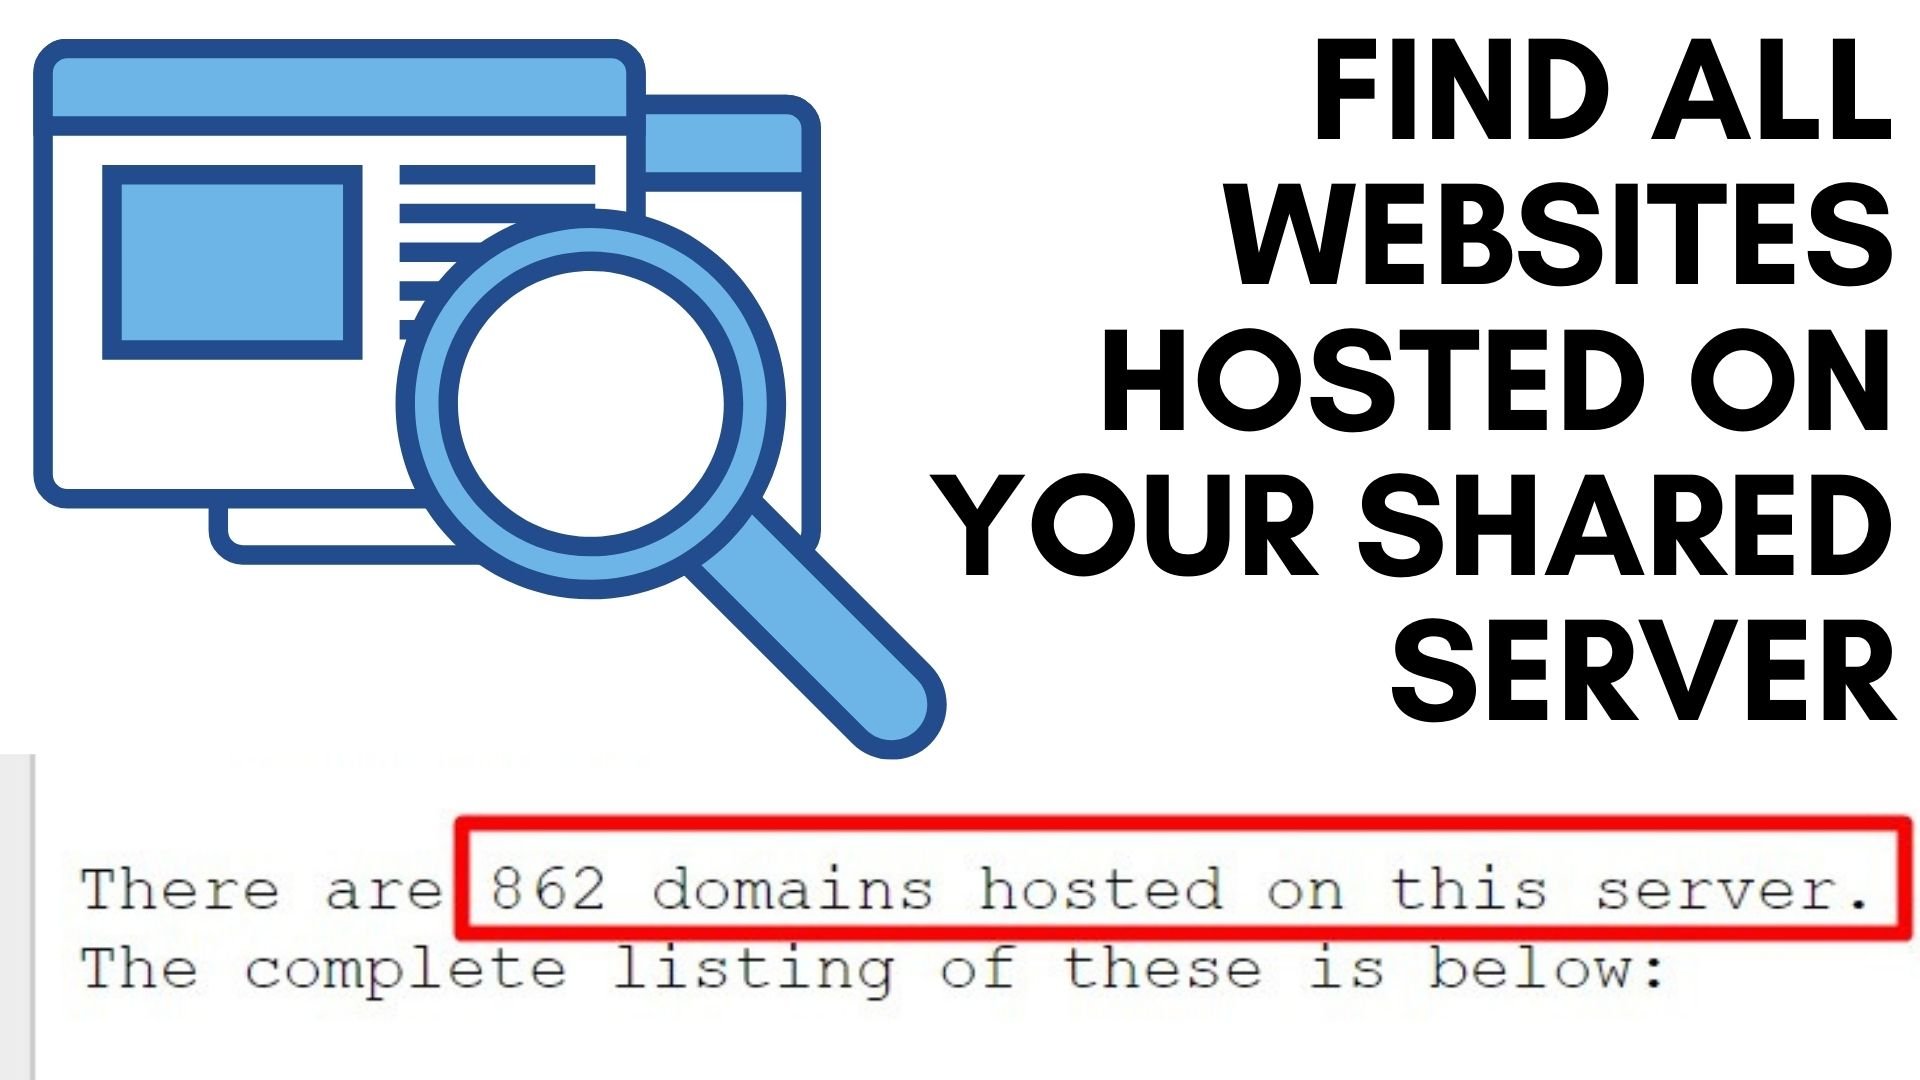 Find All Websites Hosted on your Shared Server